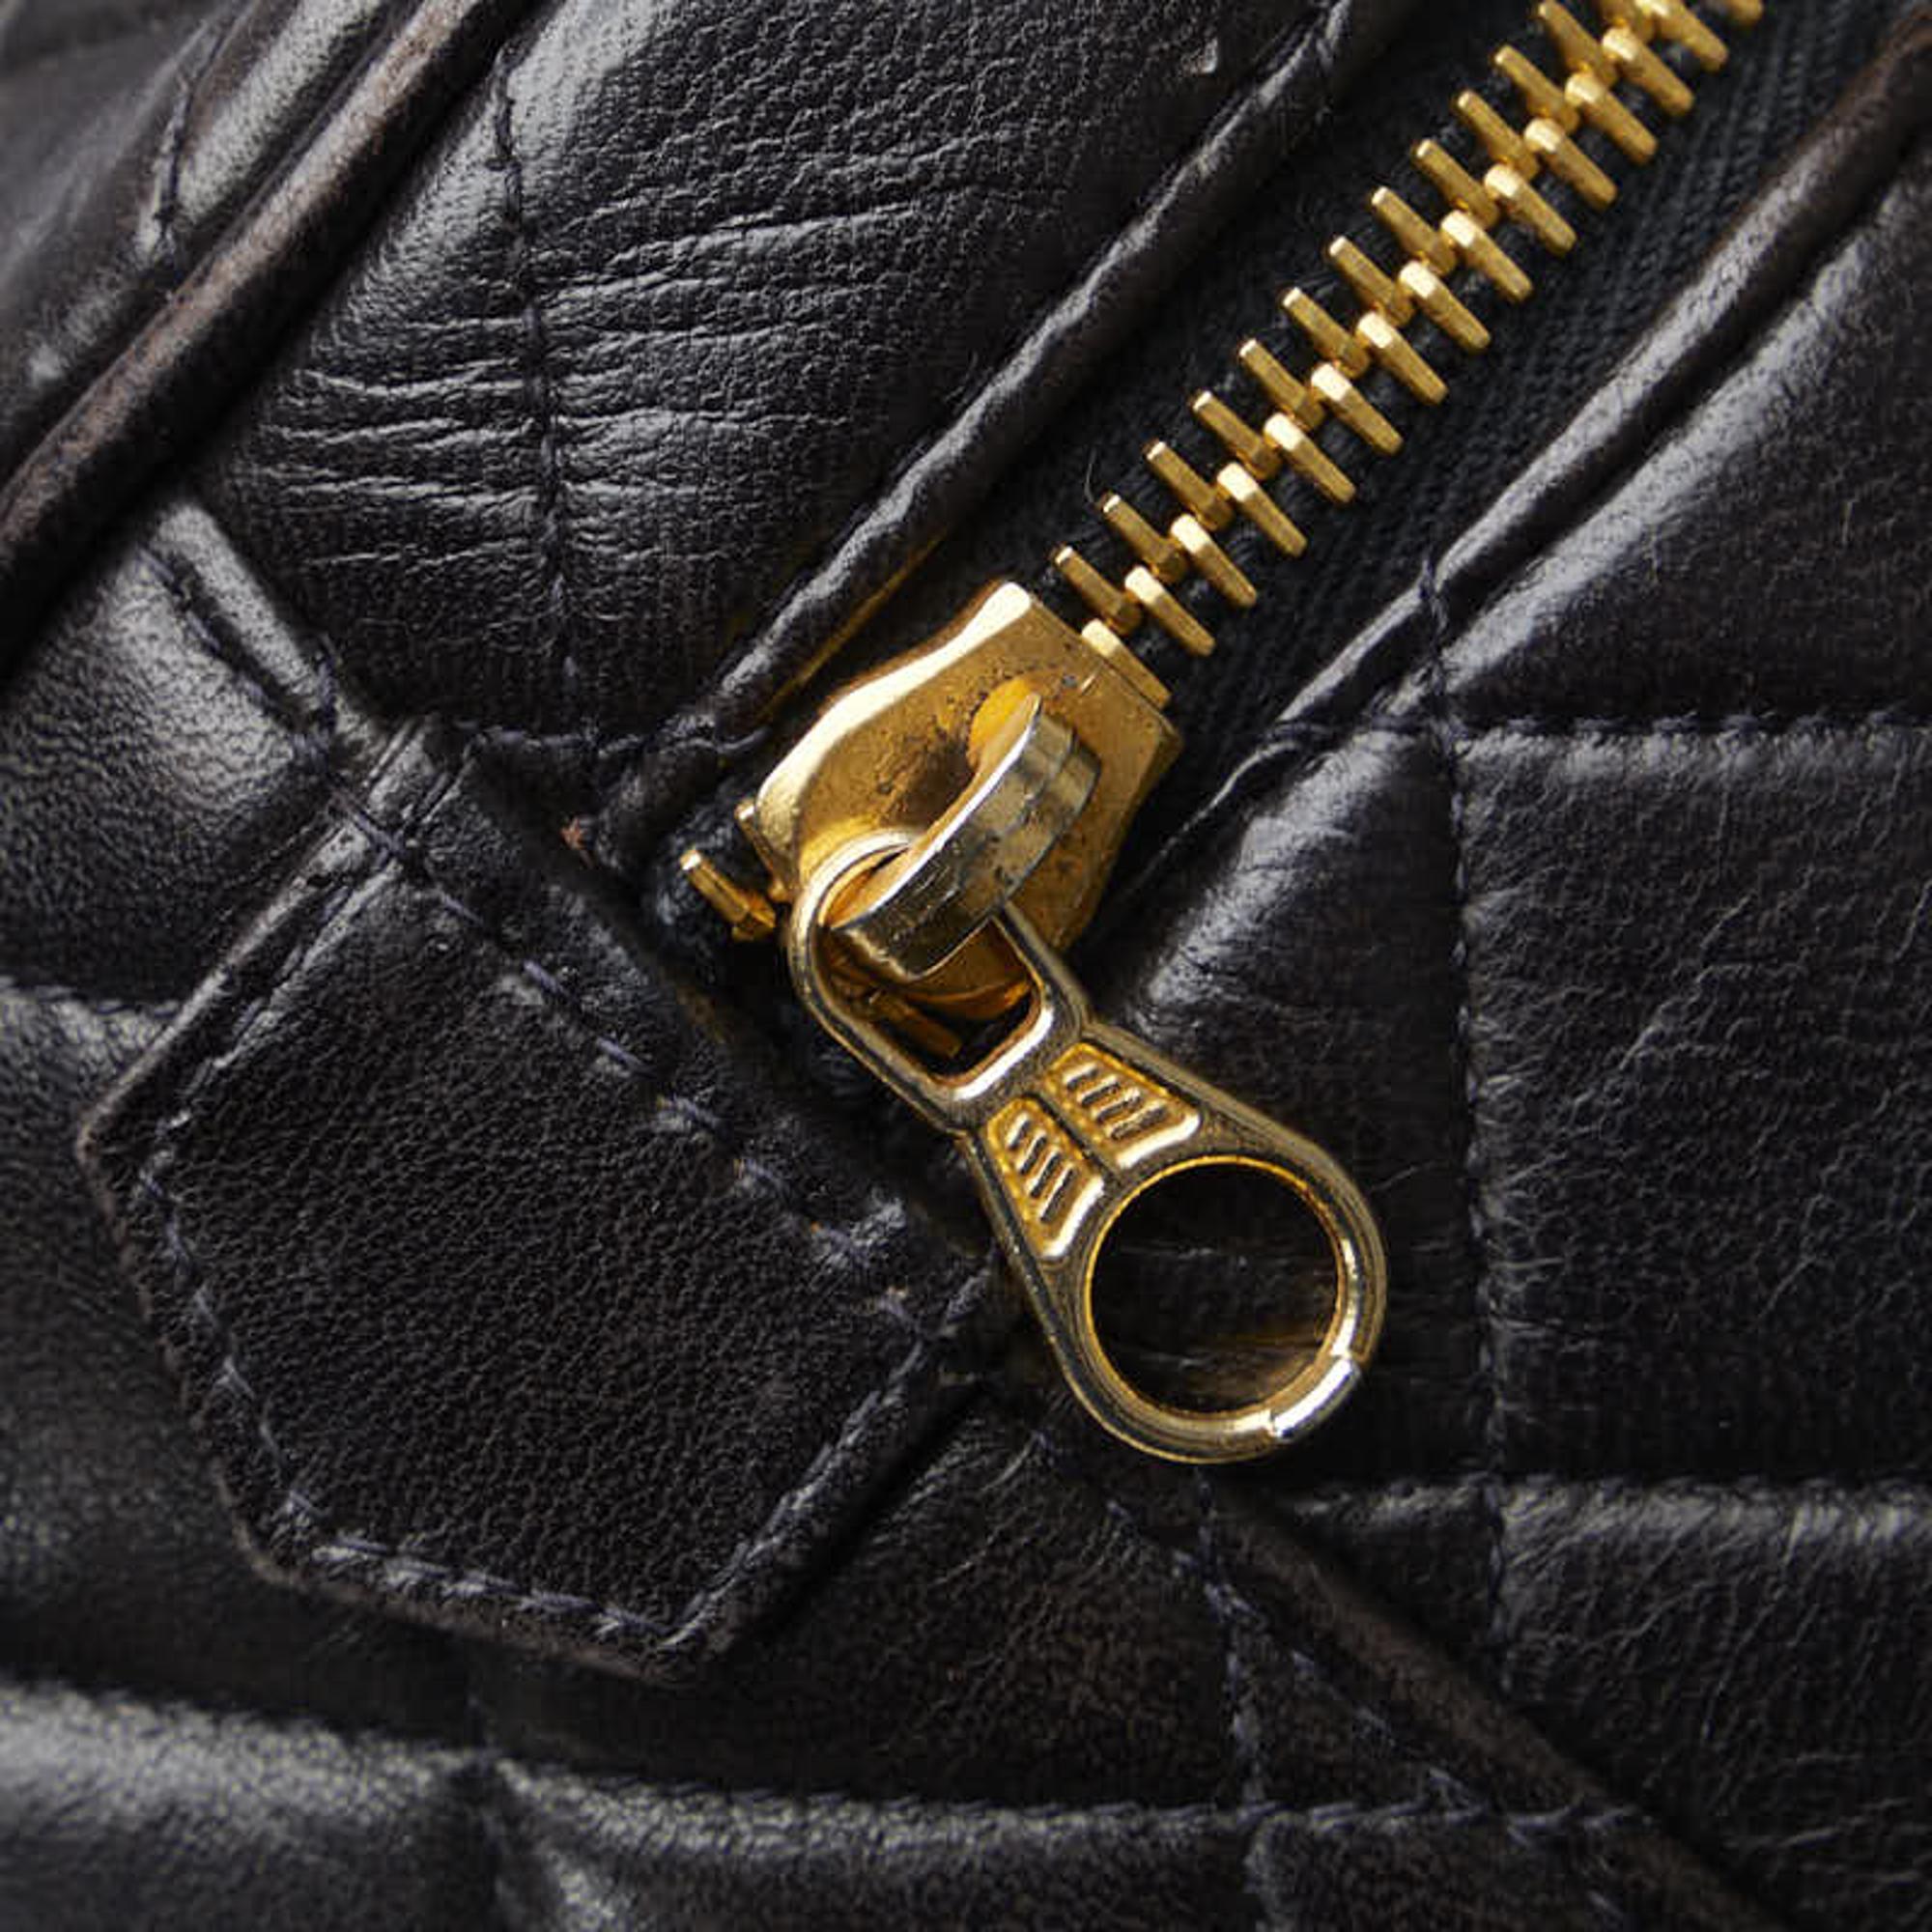 Chanel Black Leather Top Handle Vanity Case